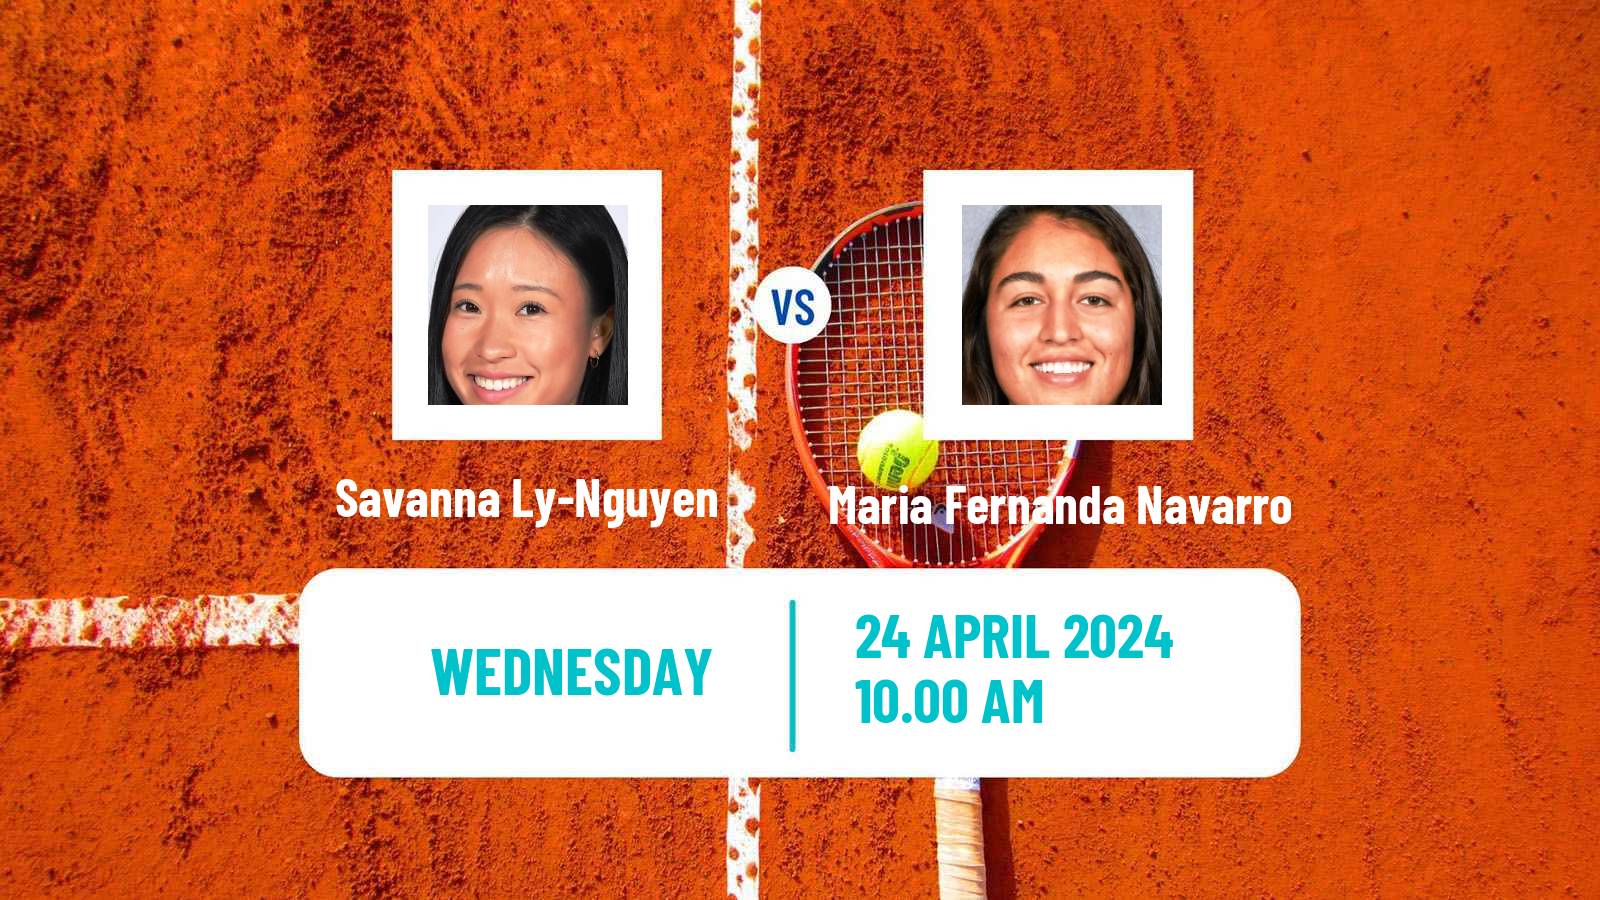 Tennis ITF W15 Monastir 15 Women Savanna Ly-Nguyen - Maria Fernanda Navarro